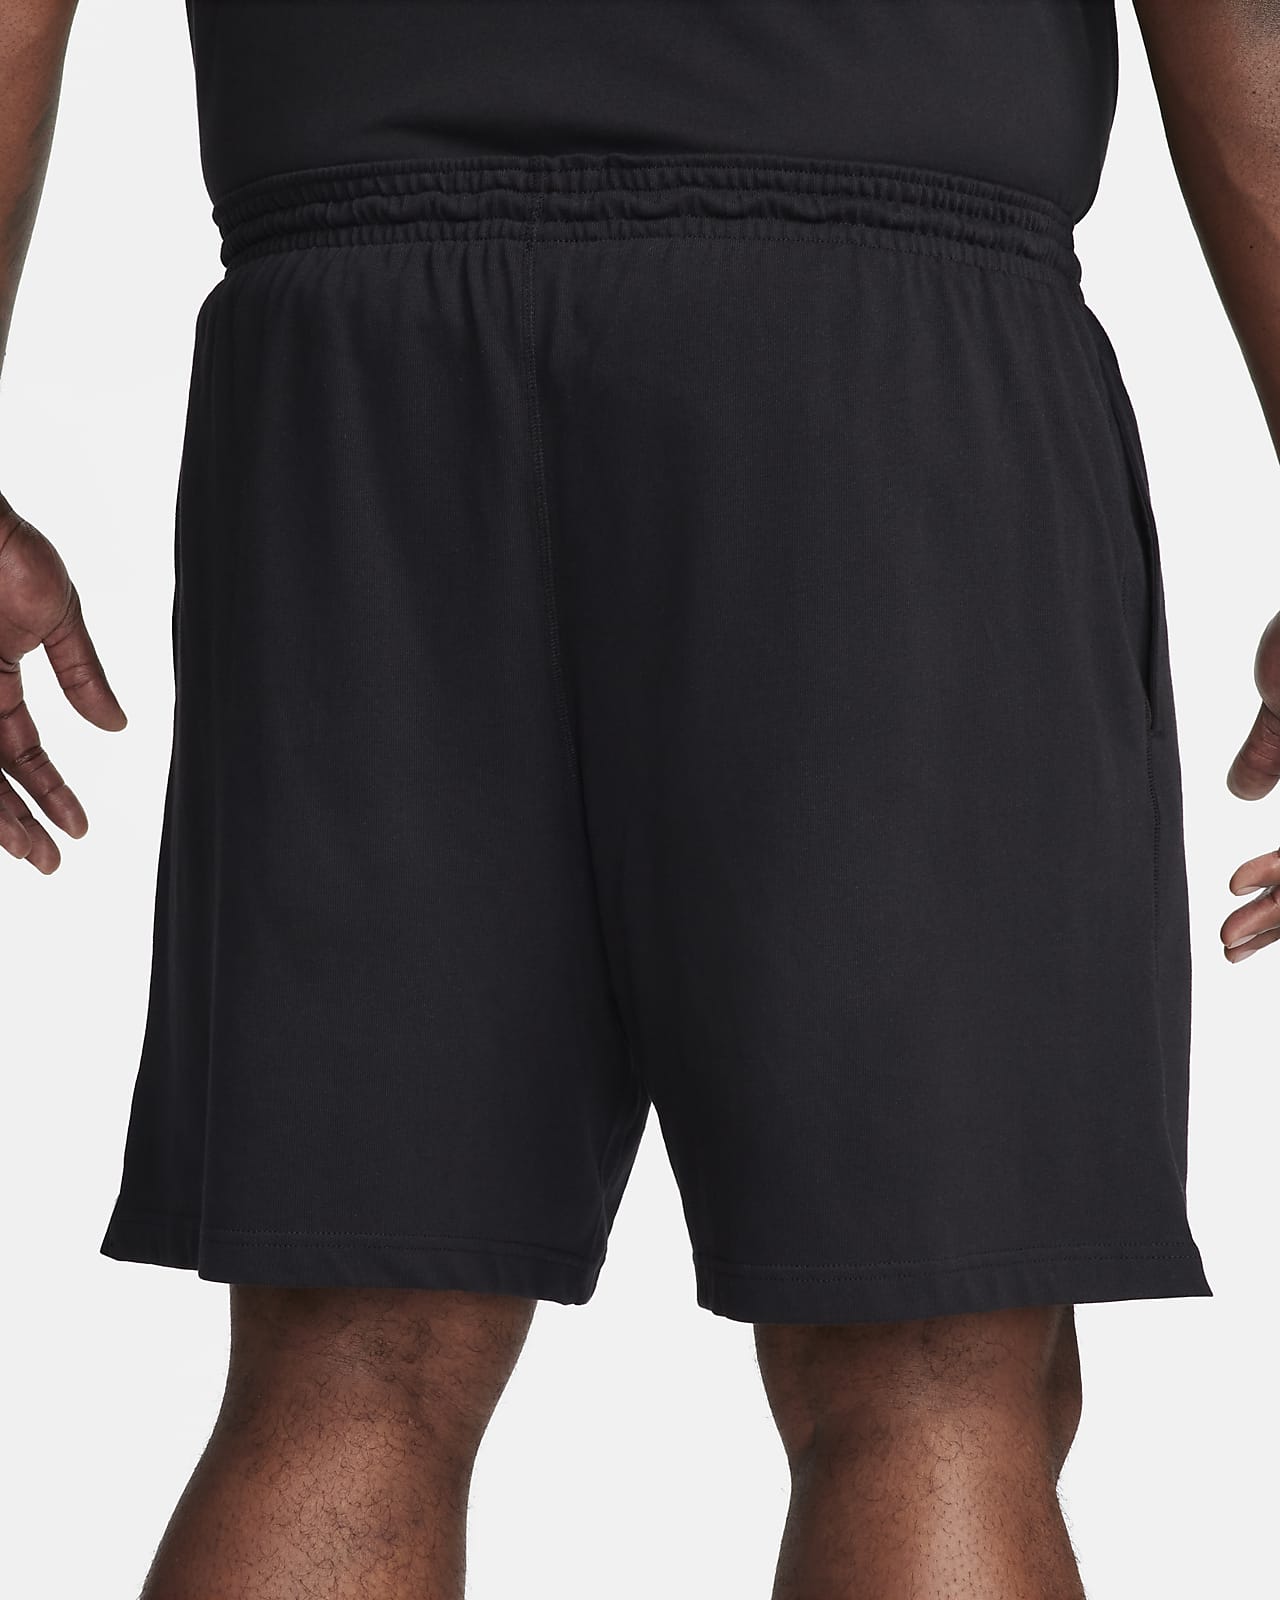 Nike Gym Short NGS71 in Ikoyi - Clothing, Chibyke Sports Limited